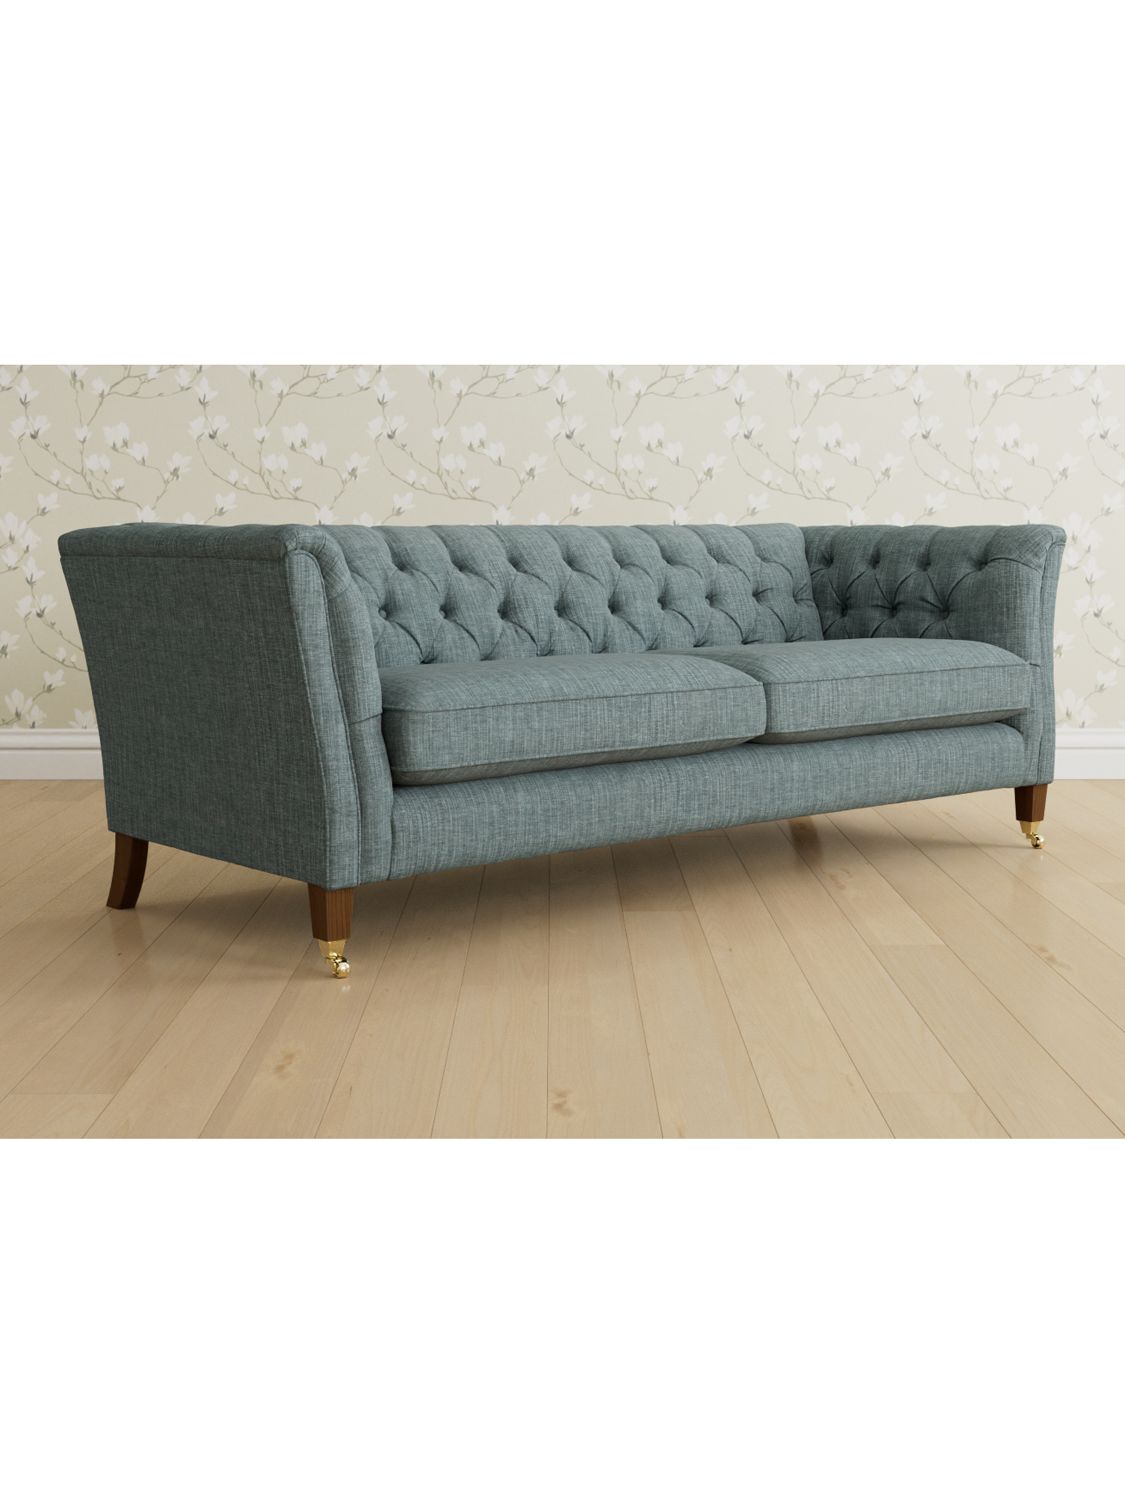 Chatsworth Range, Laura Ashley Chatsworth Grand 4 Seater Sofa, Teak Leg, Bainton Newport Blue